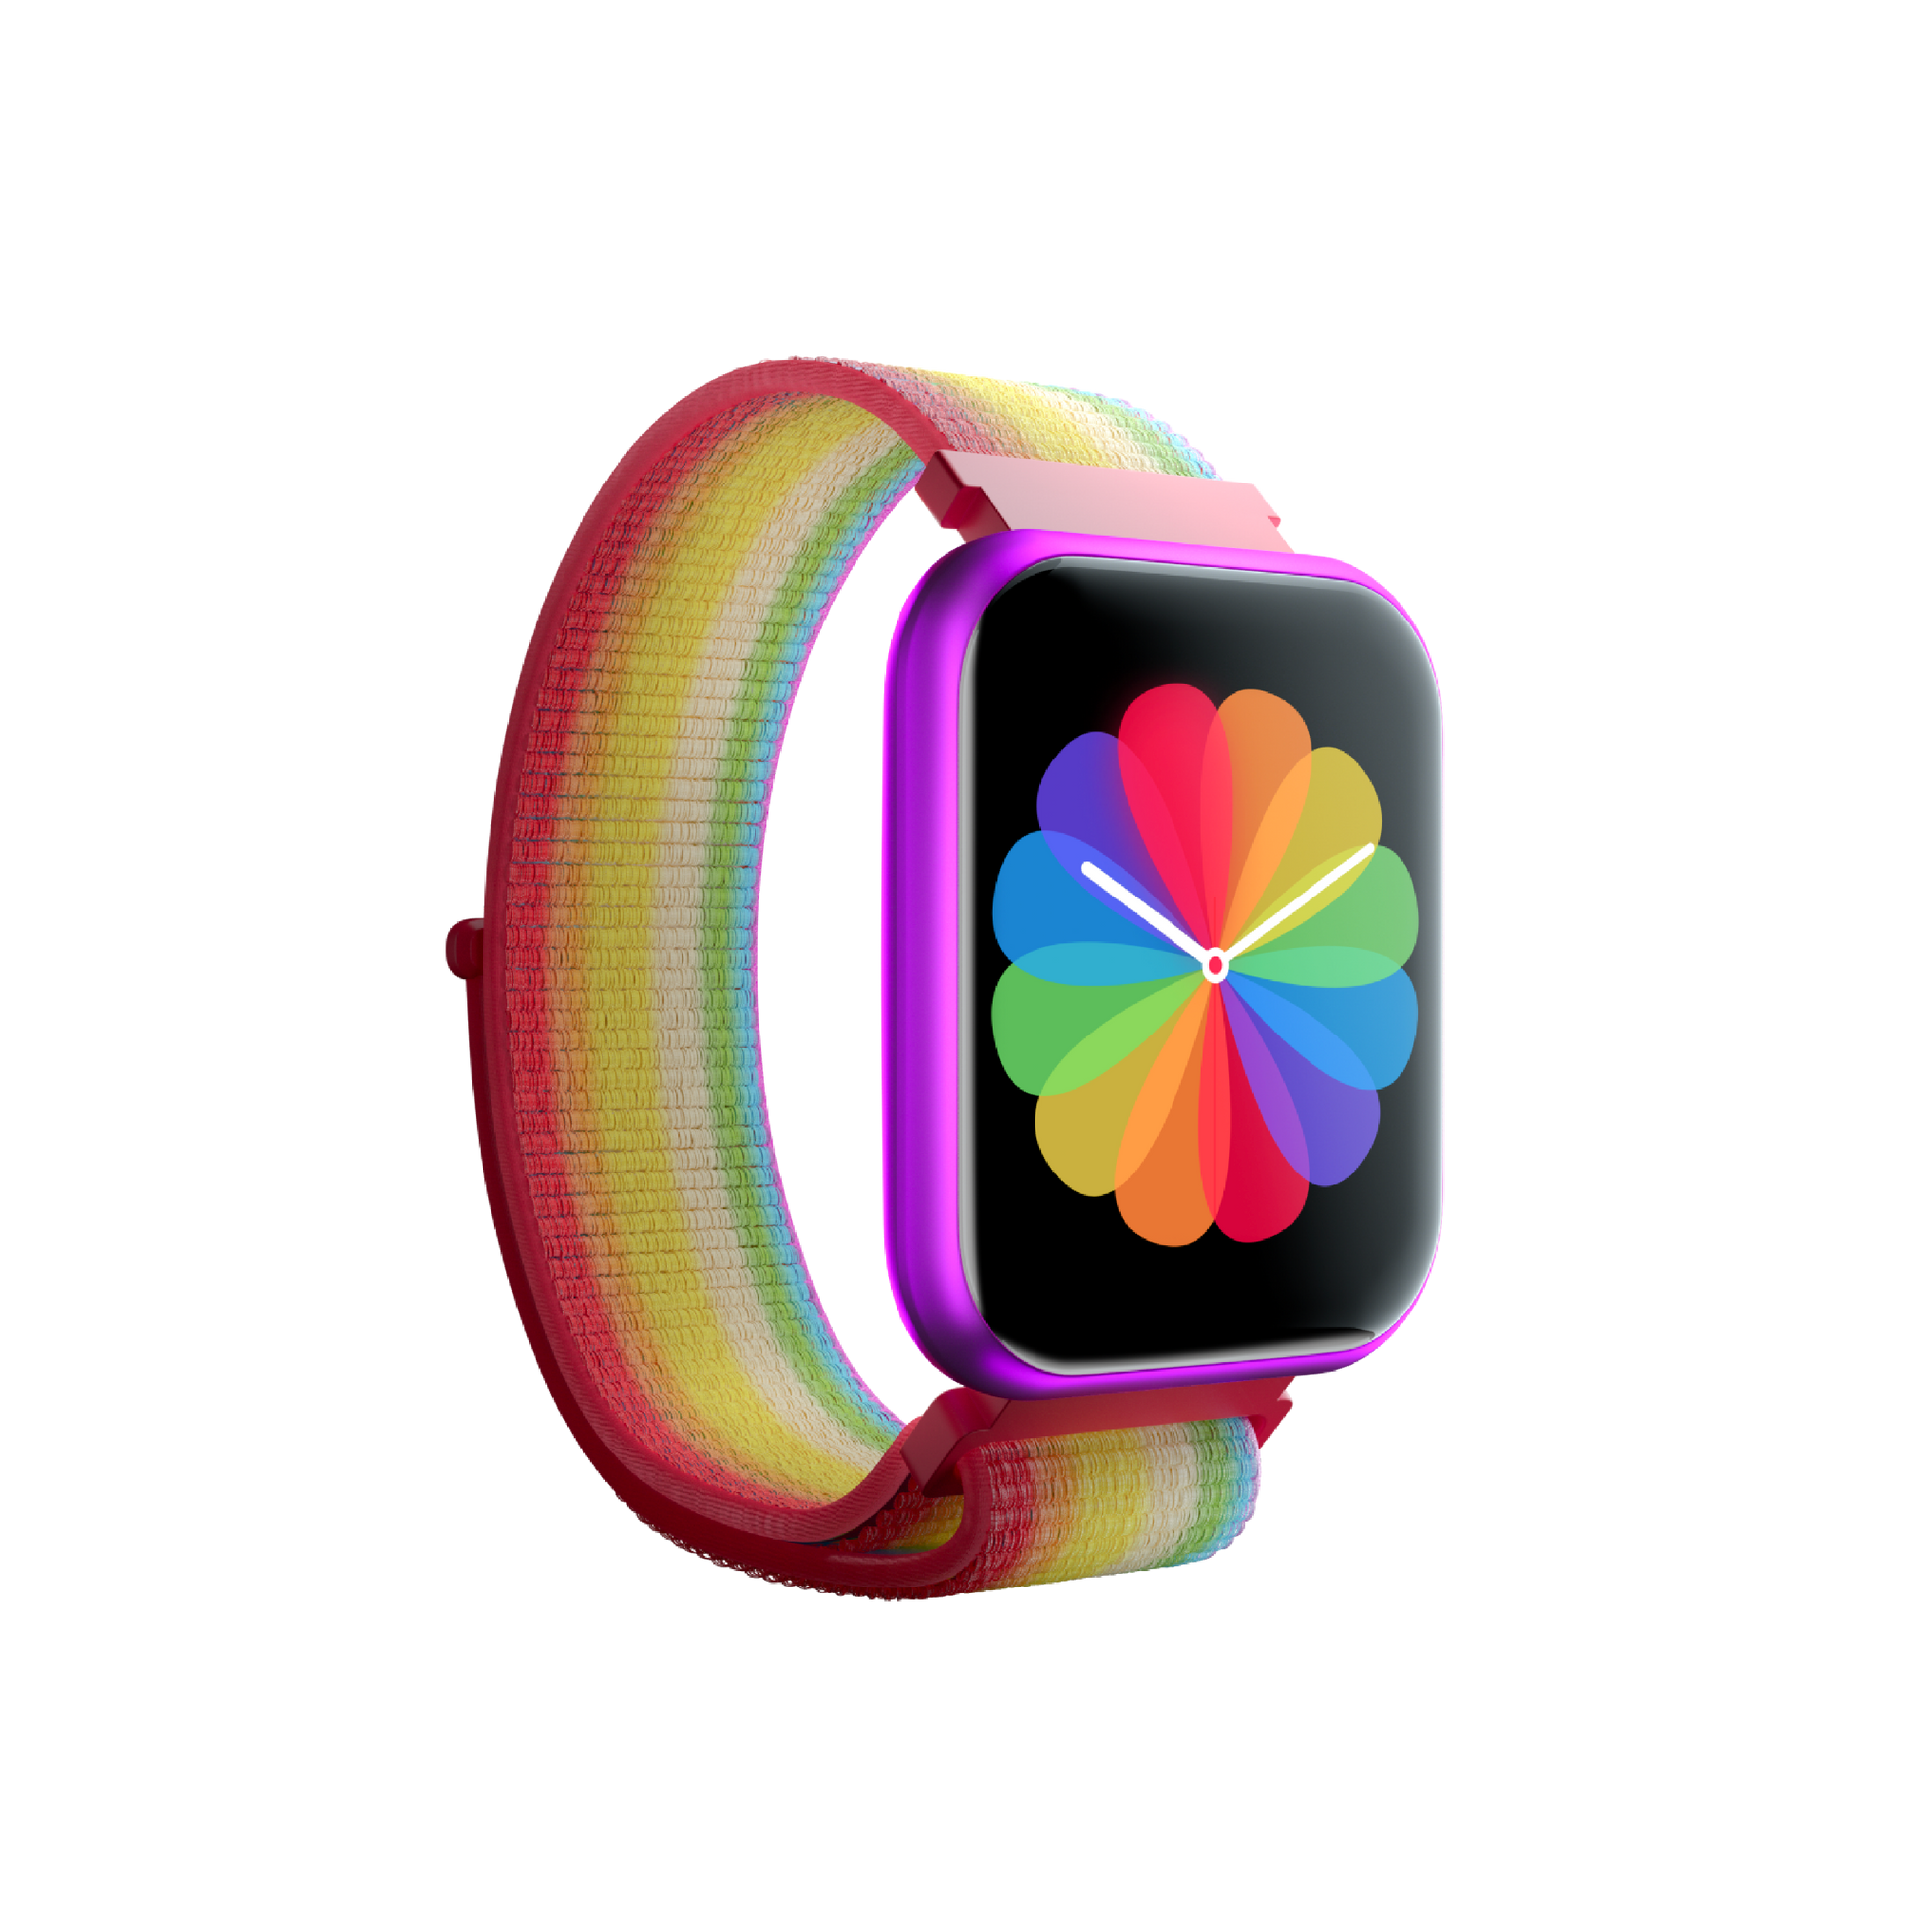 Purple Wyze Watch 47c. Shows rainbow watch band and smart digital interface.